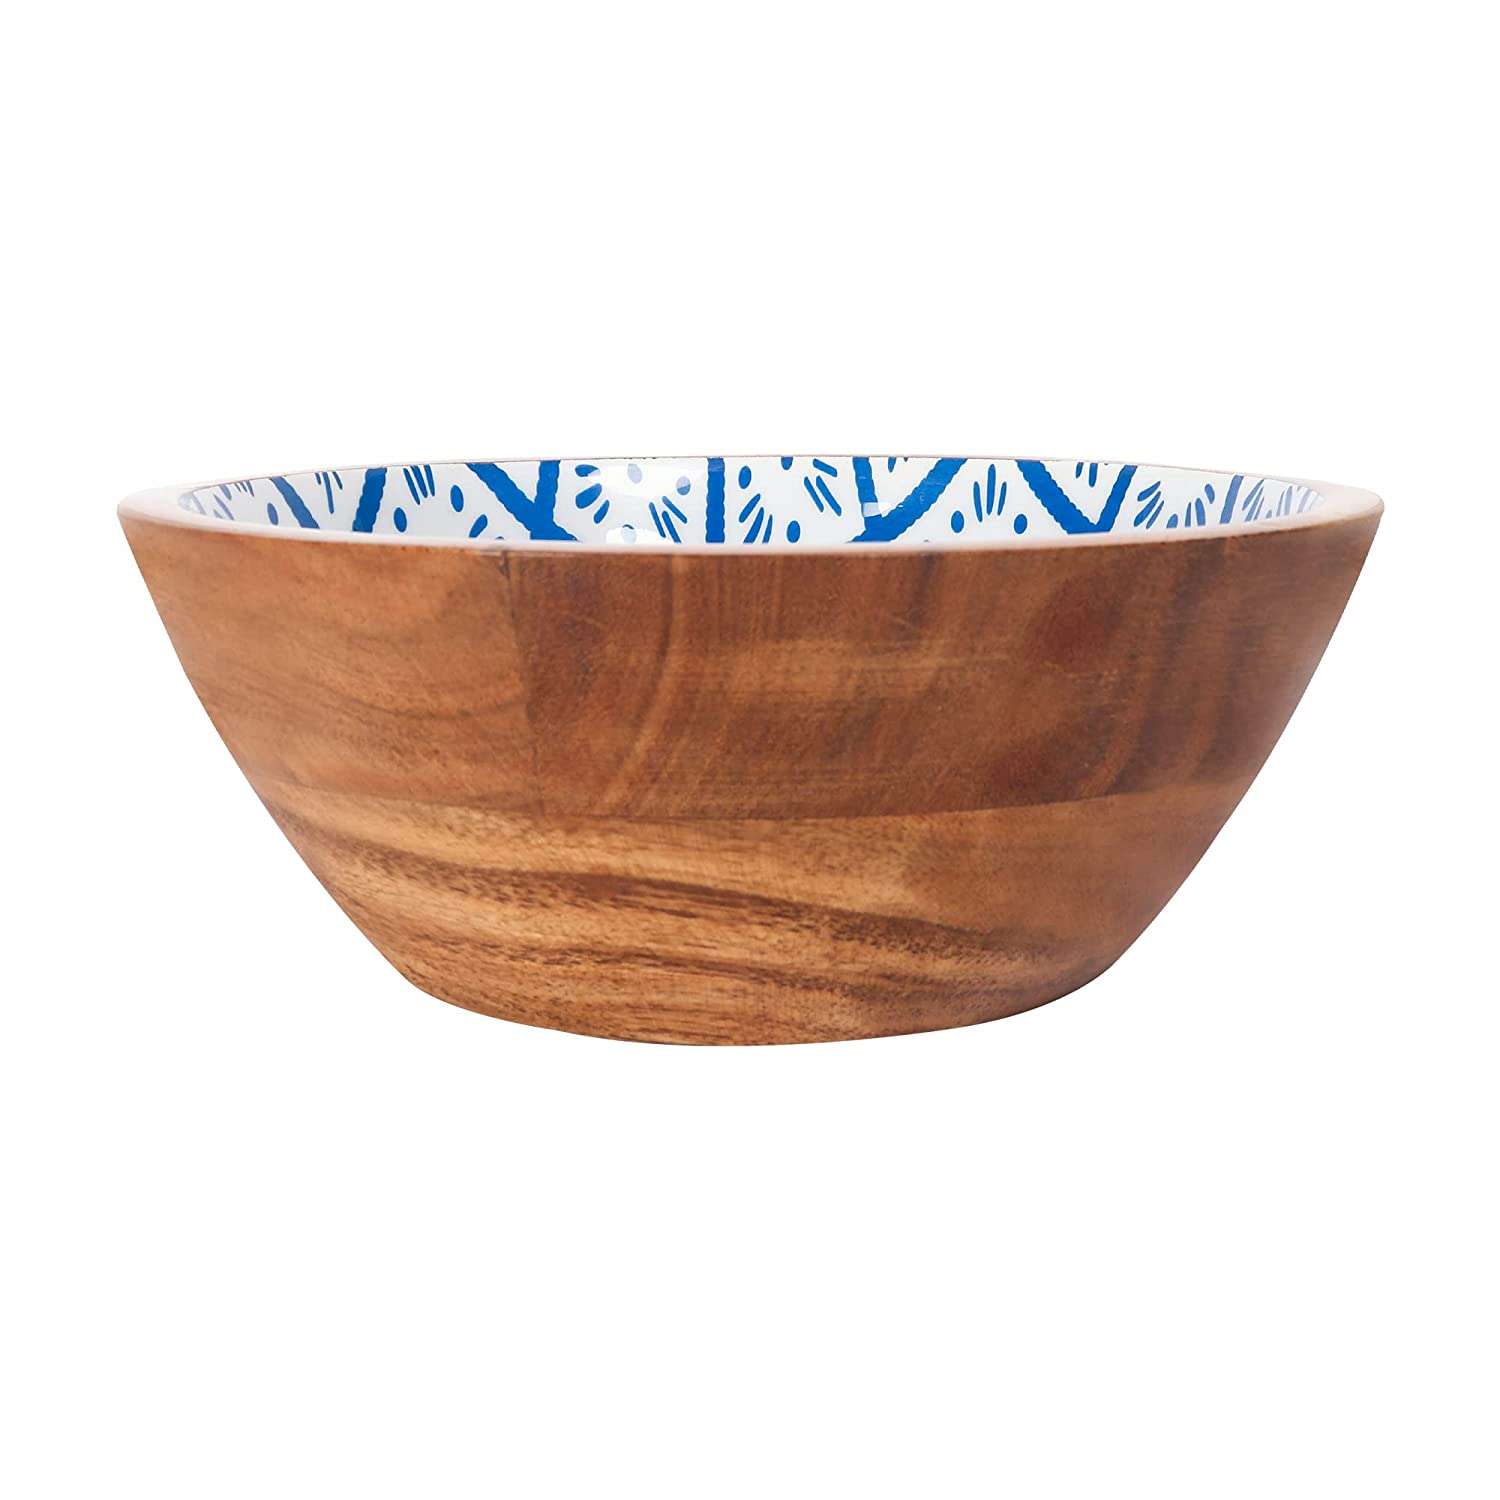 Wooden Salad Bowl | Beautiful Wood Bowl with Enamel